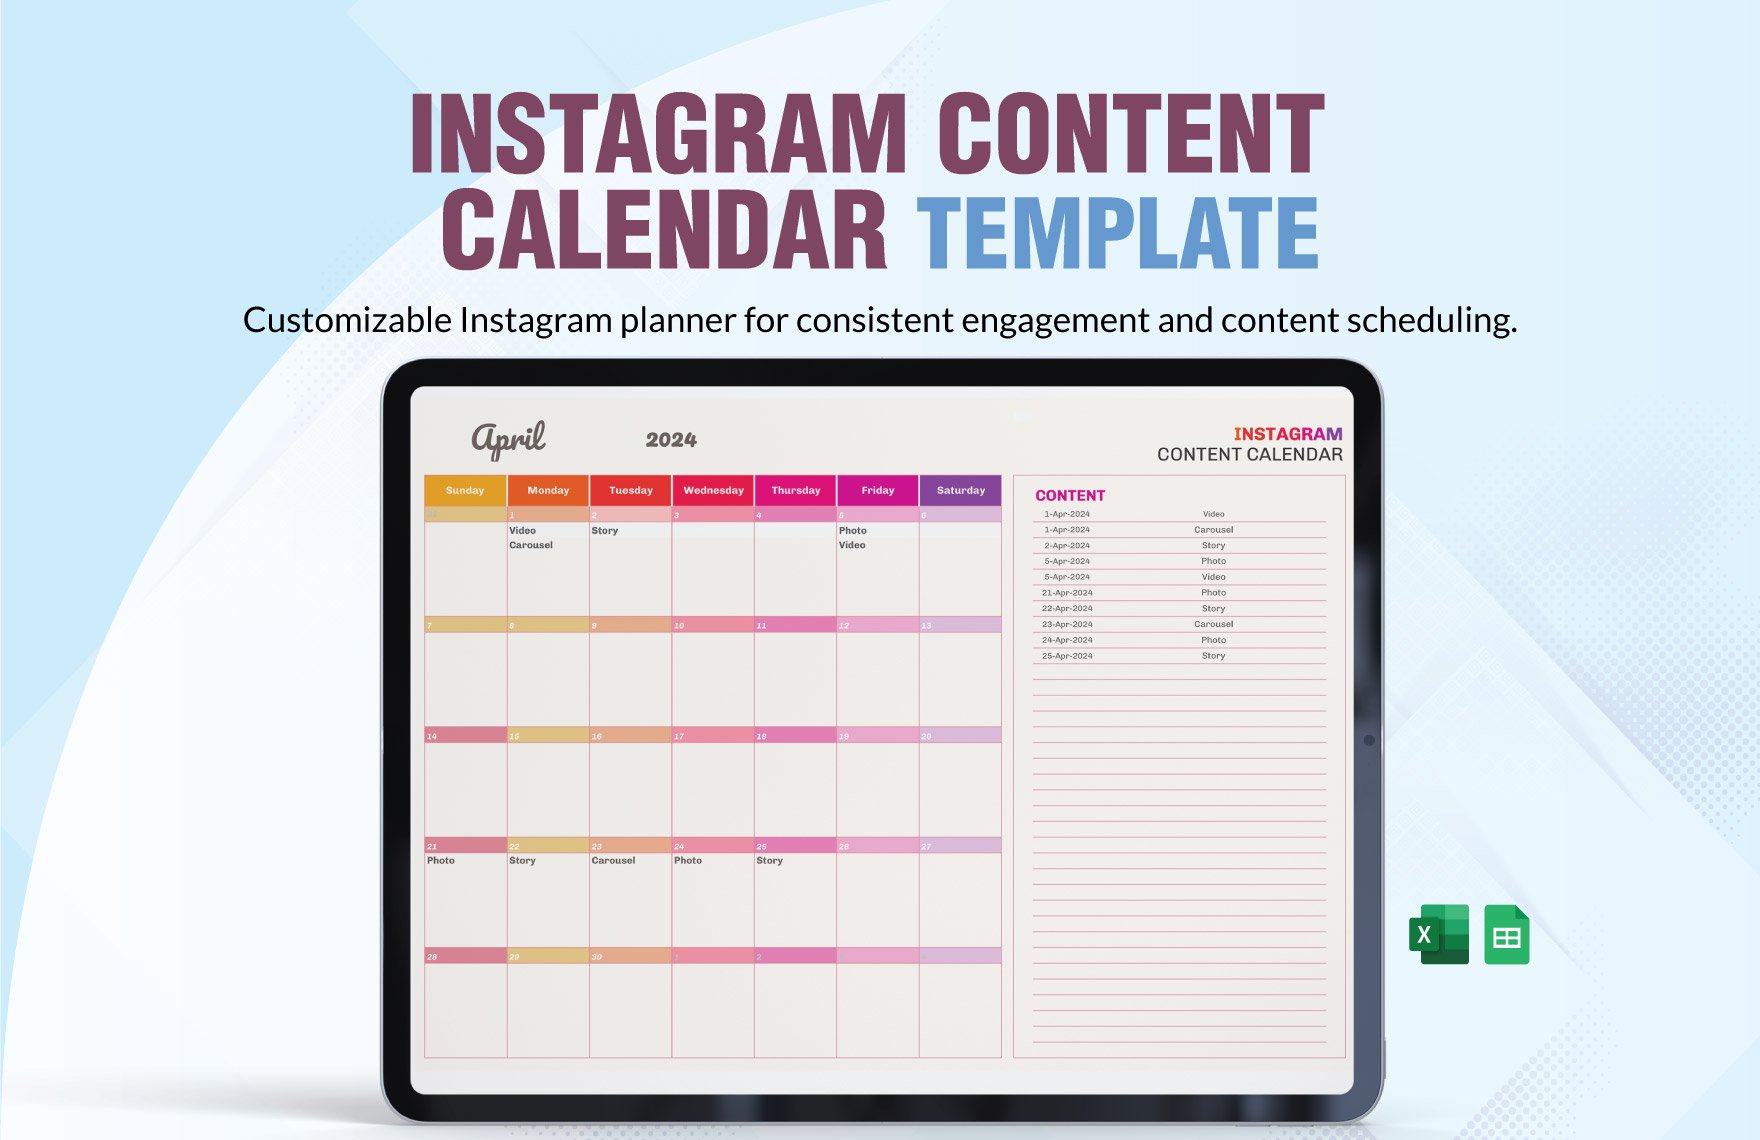 Instagram Content Calendar Template in Excel, Google Sheets